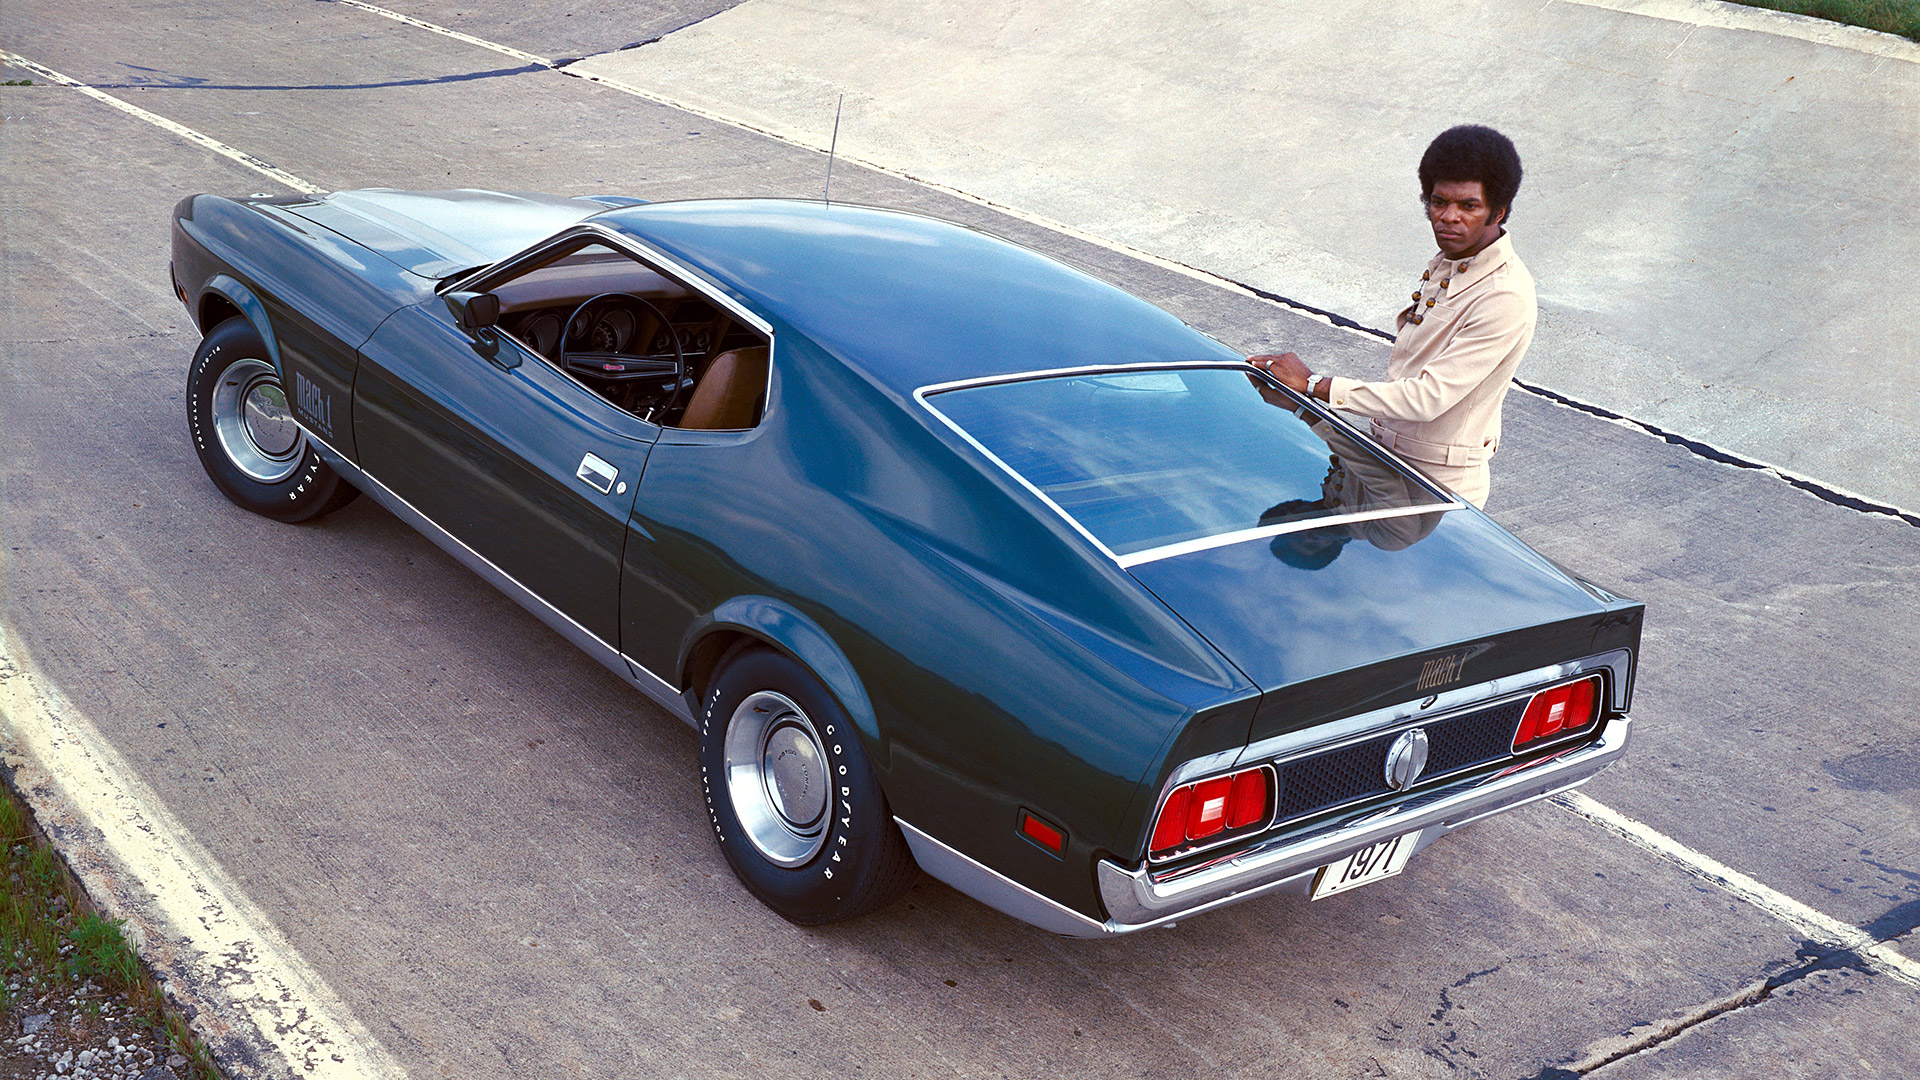  1971 Ford Mustang Mach 1 Wallpaper.